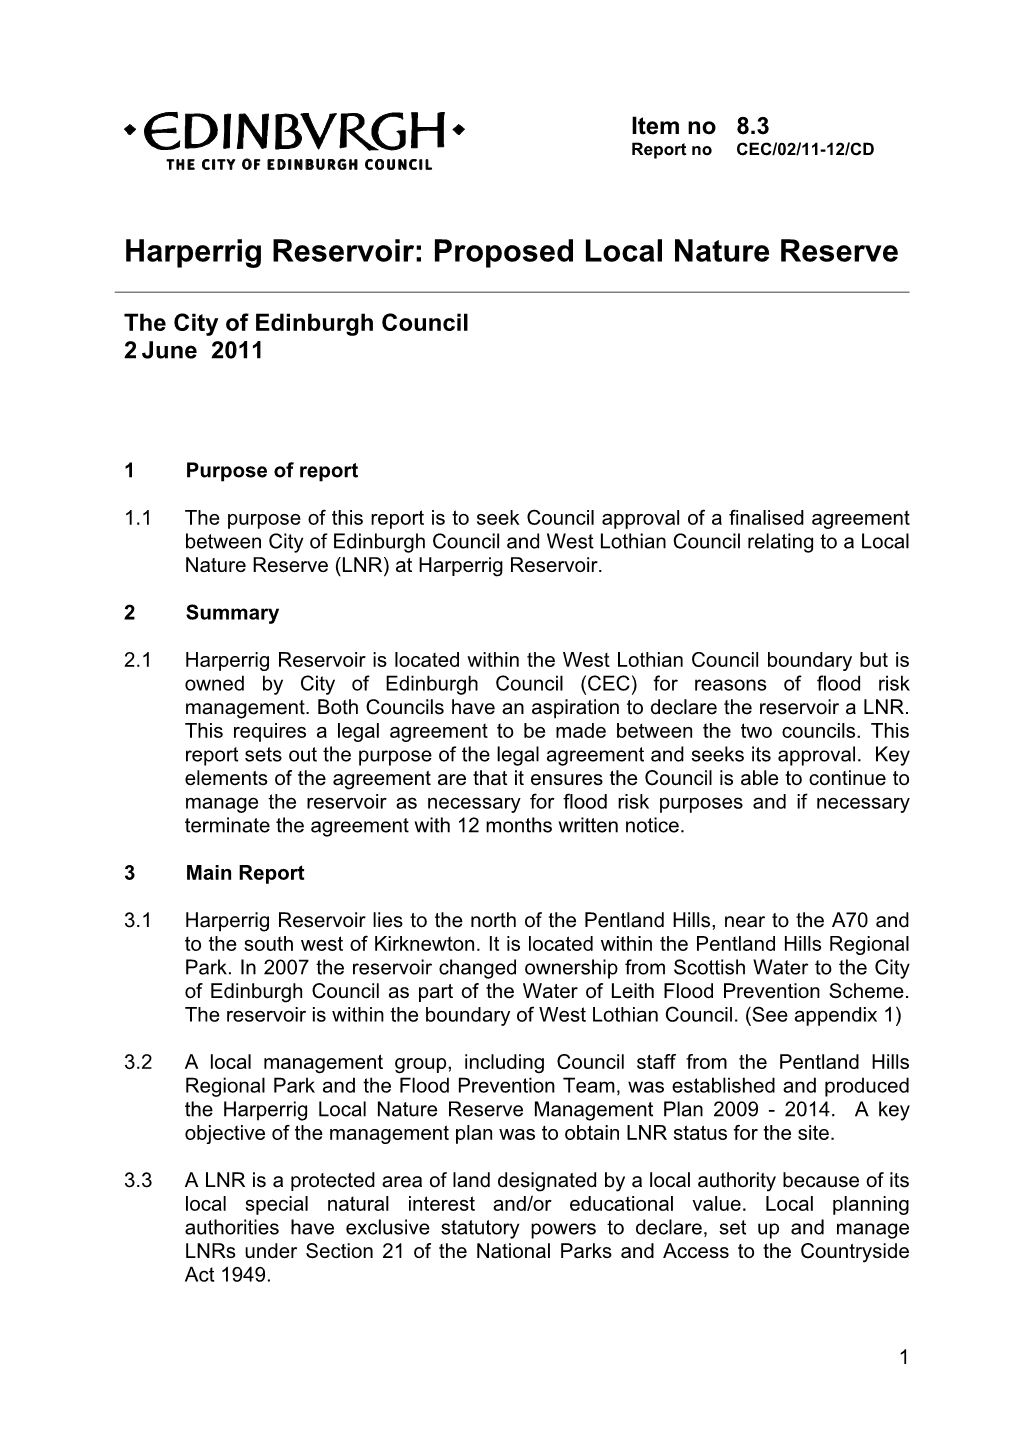 Harperrig Reservoir: Proposed Local Nature Reserve